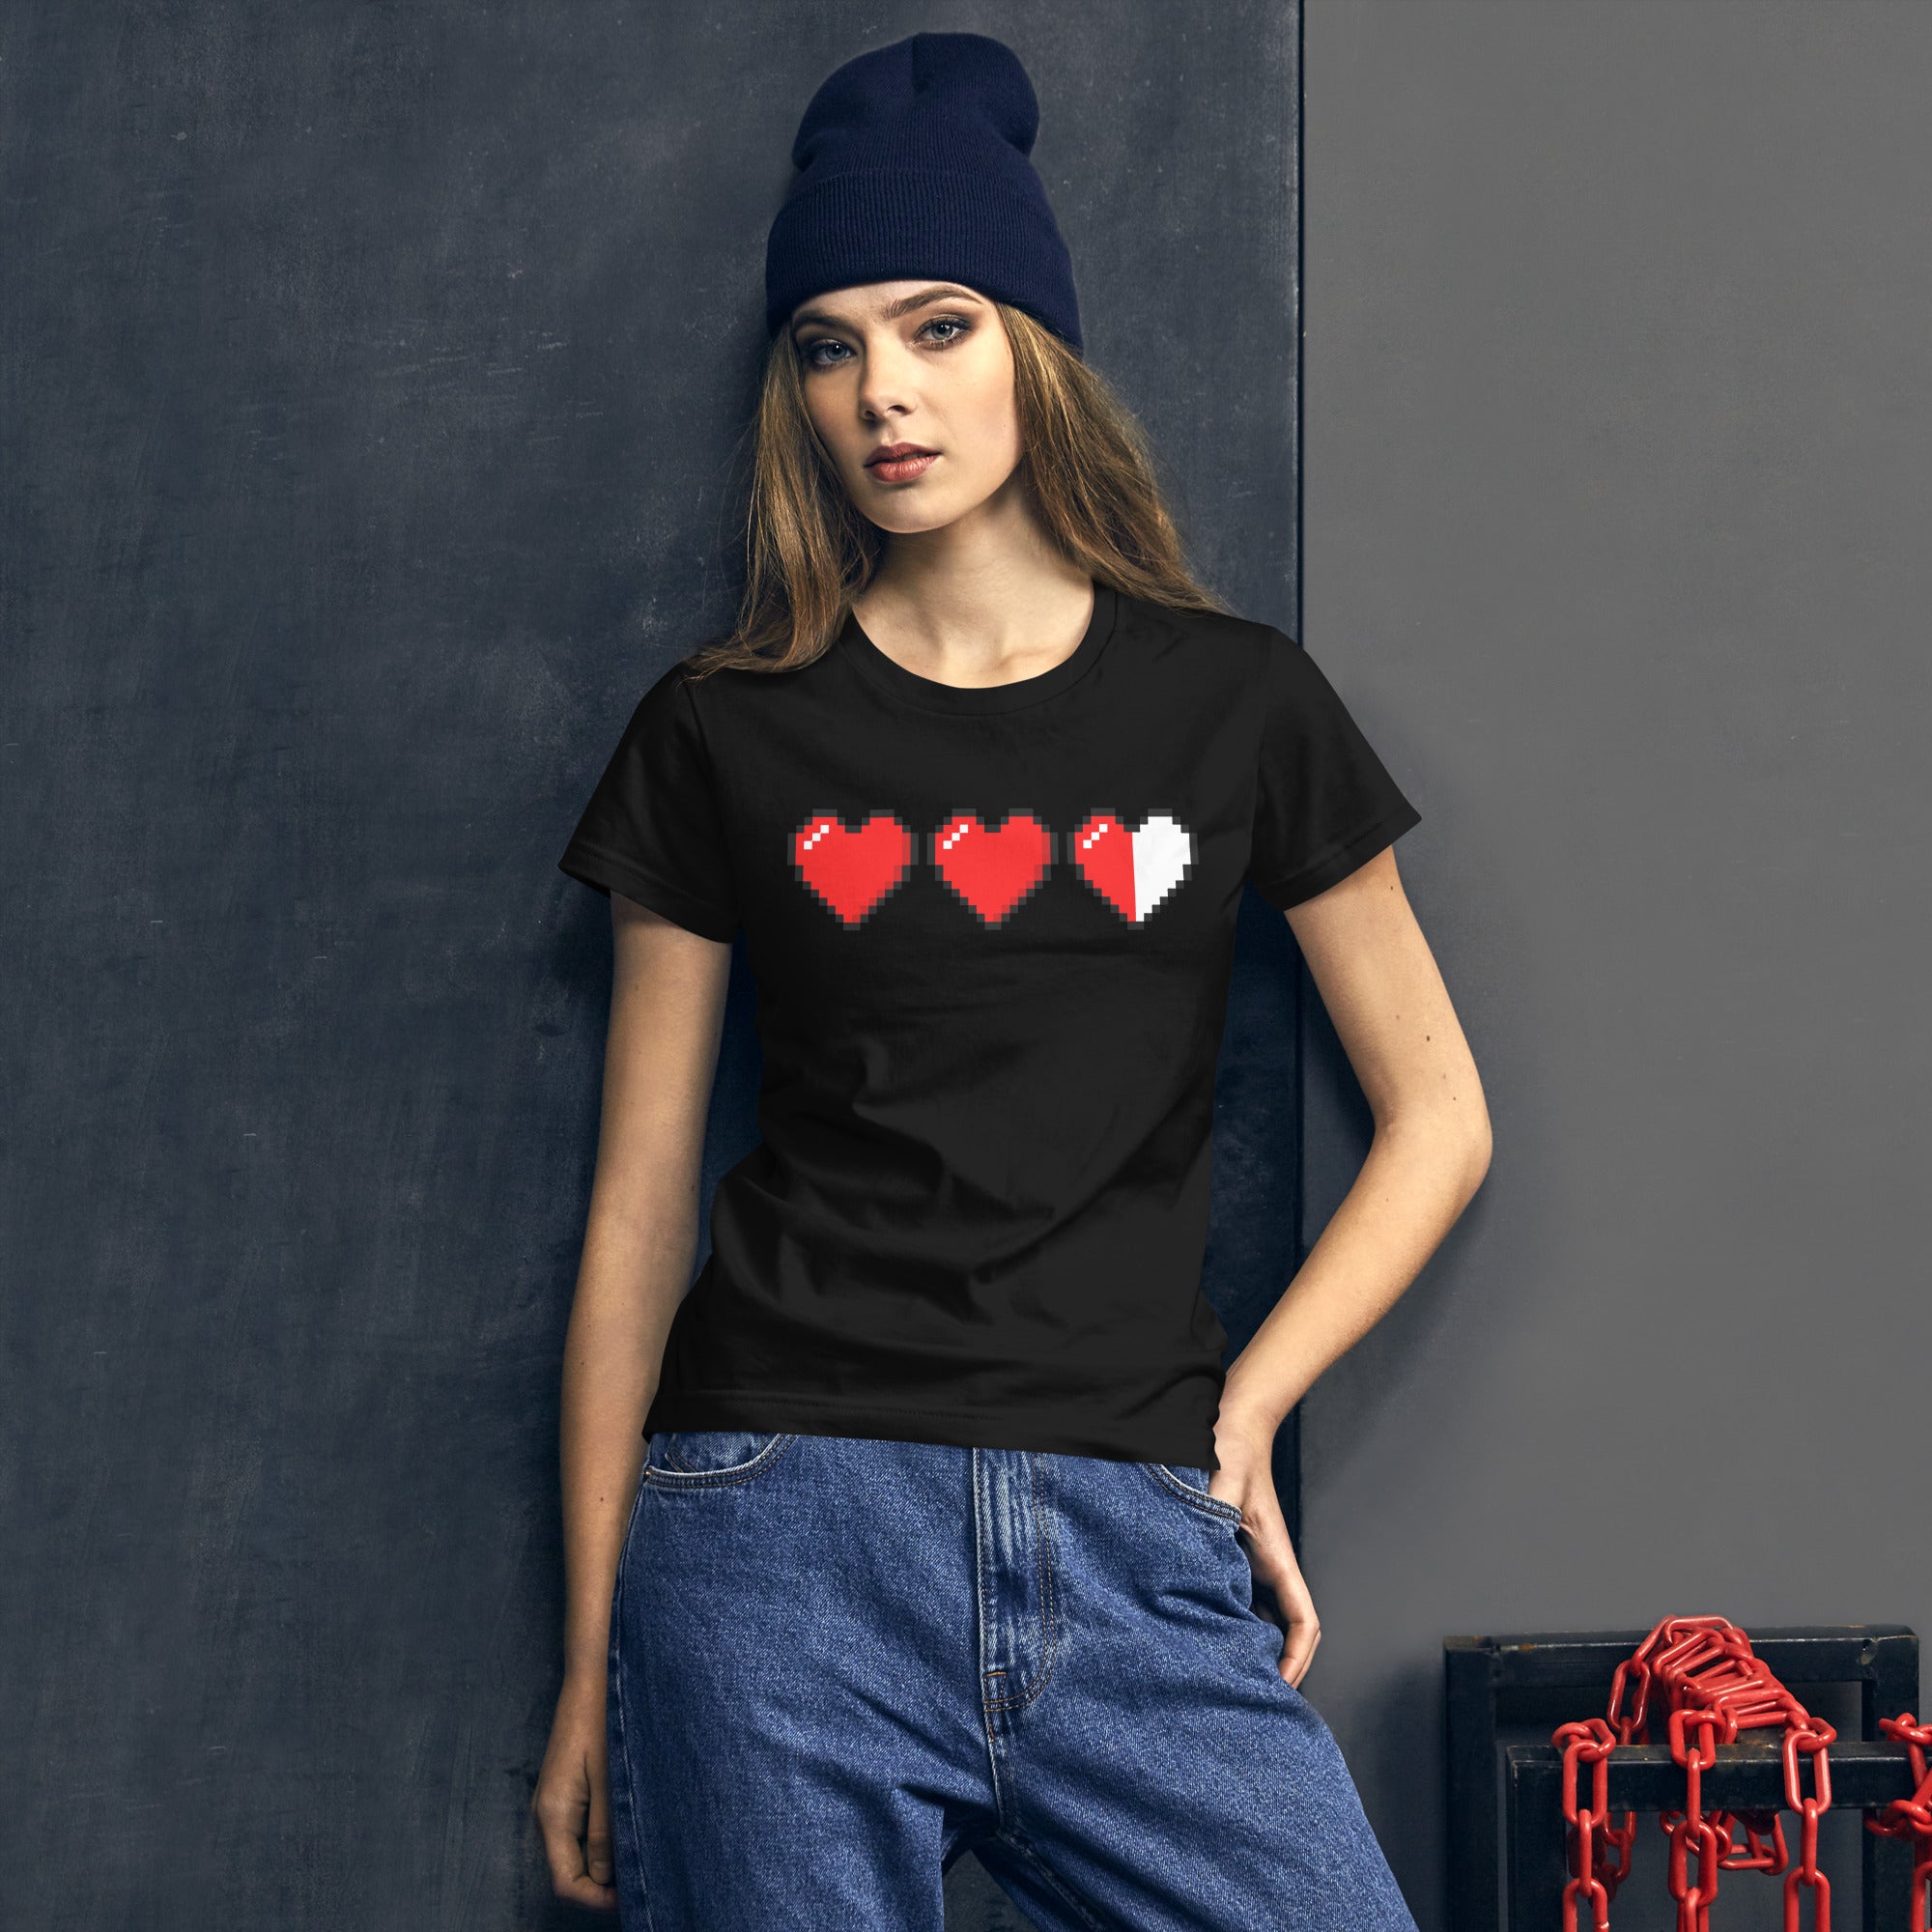 3 Heart Meter Retro 8 Bit Video Game Pixelated Women's Short Sleeve Babydoll T-shirt